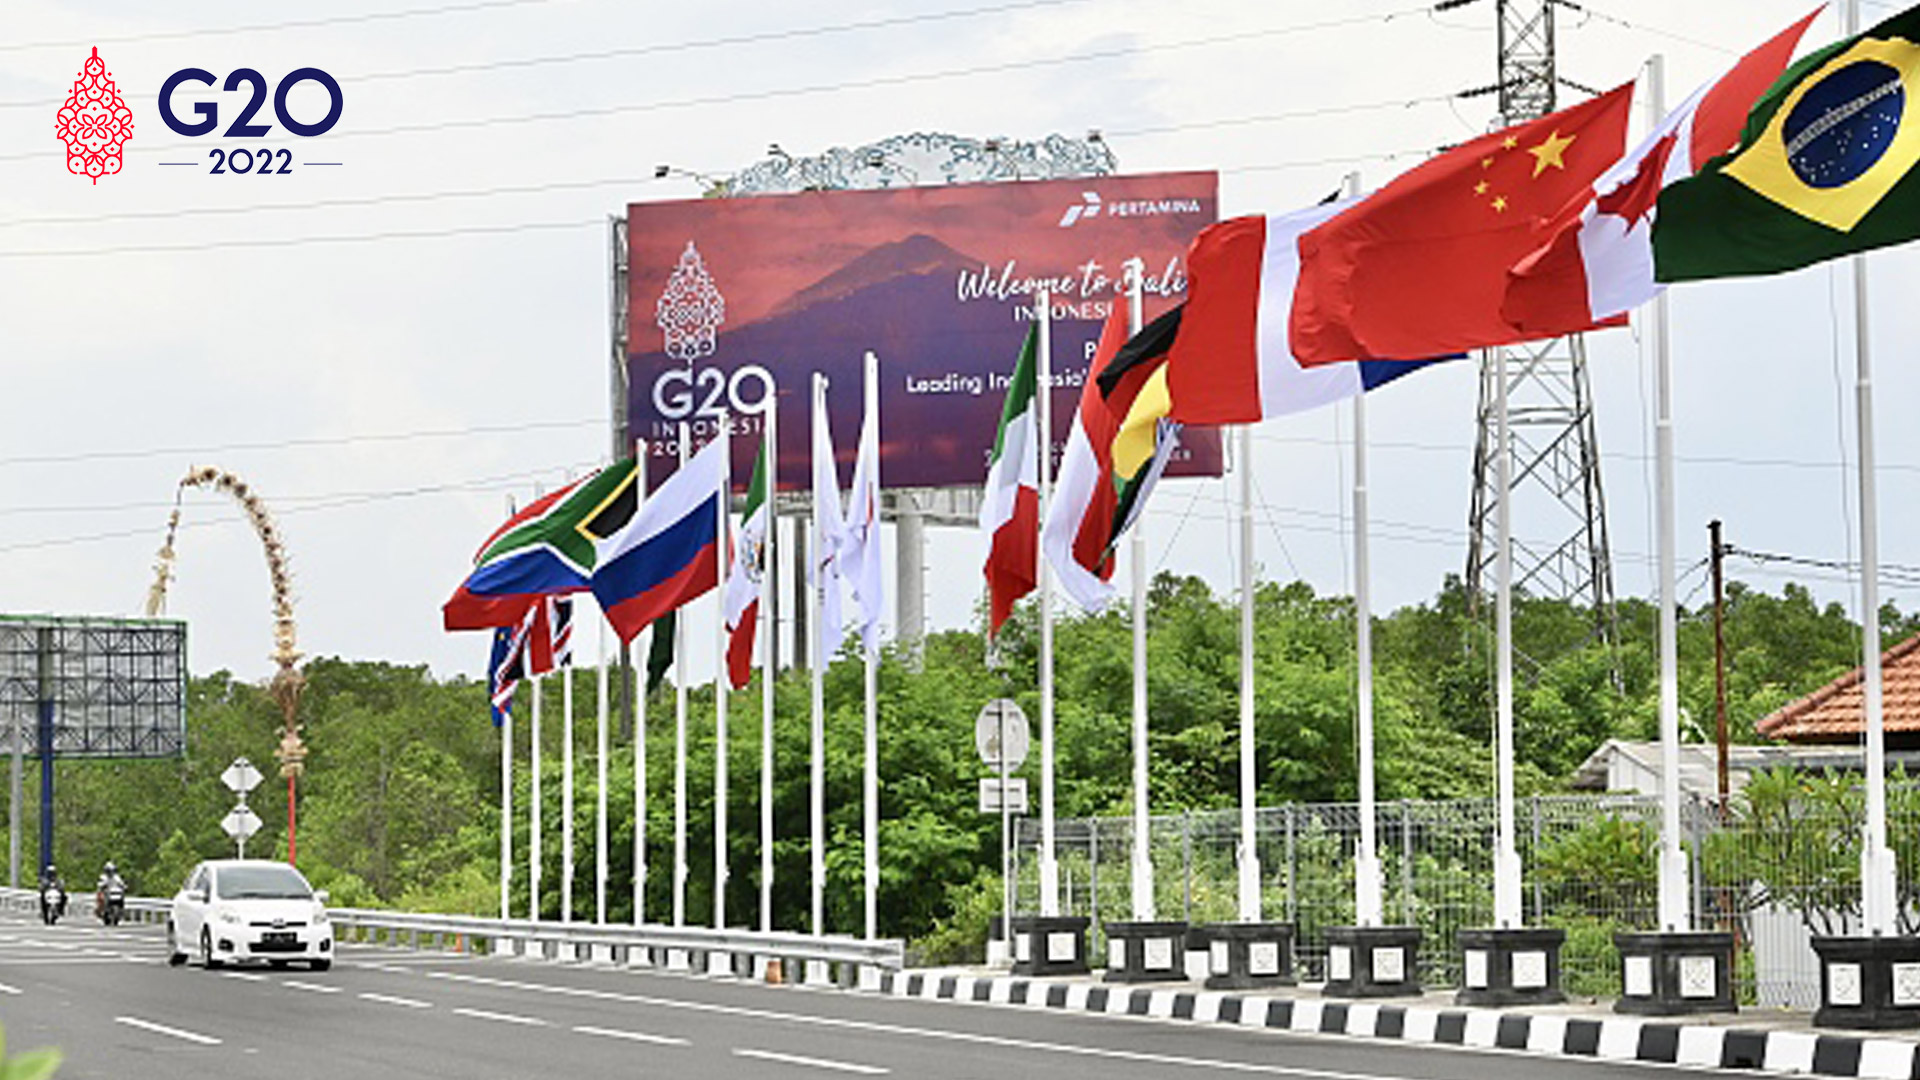 Live: G20 leaders arrive at meeting venue